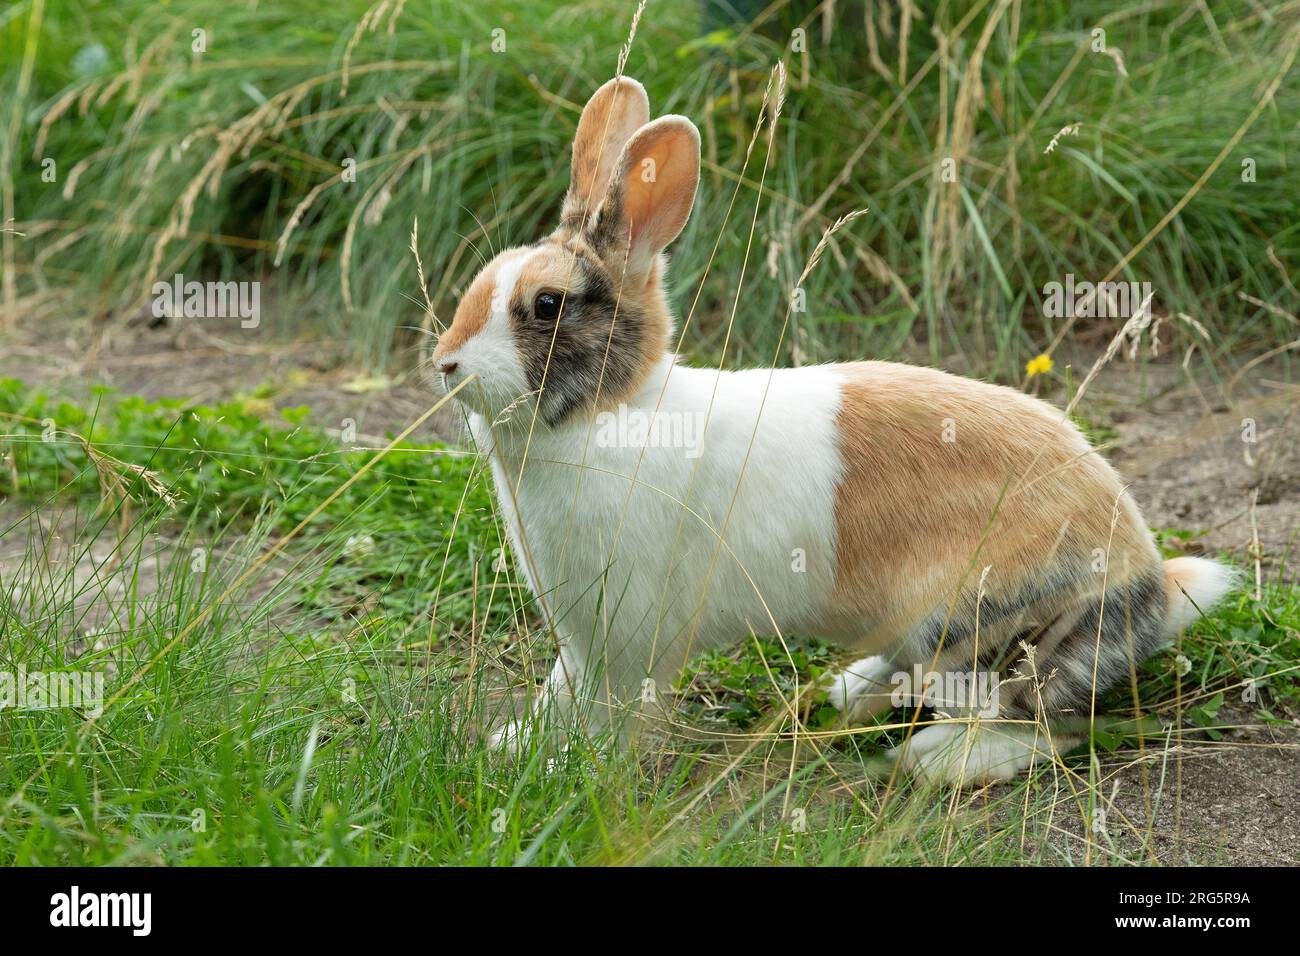 Dutch rabbit standing in path, Germany Stock Photo